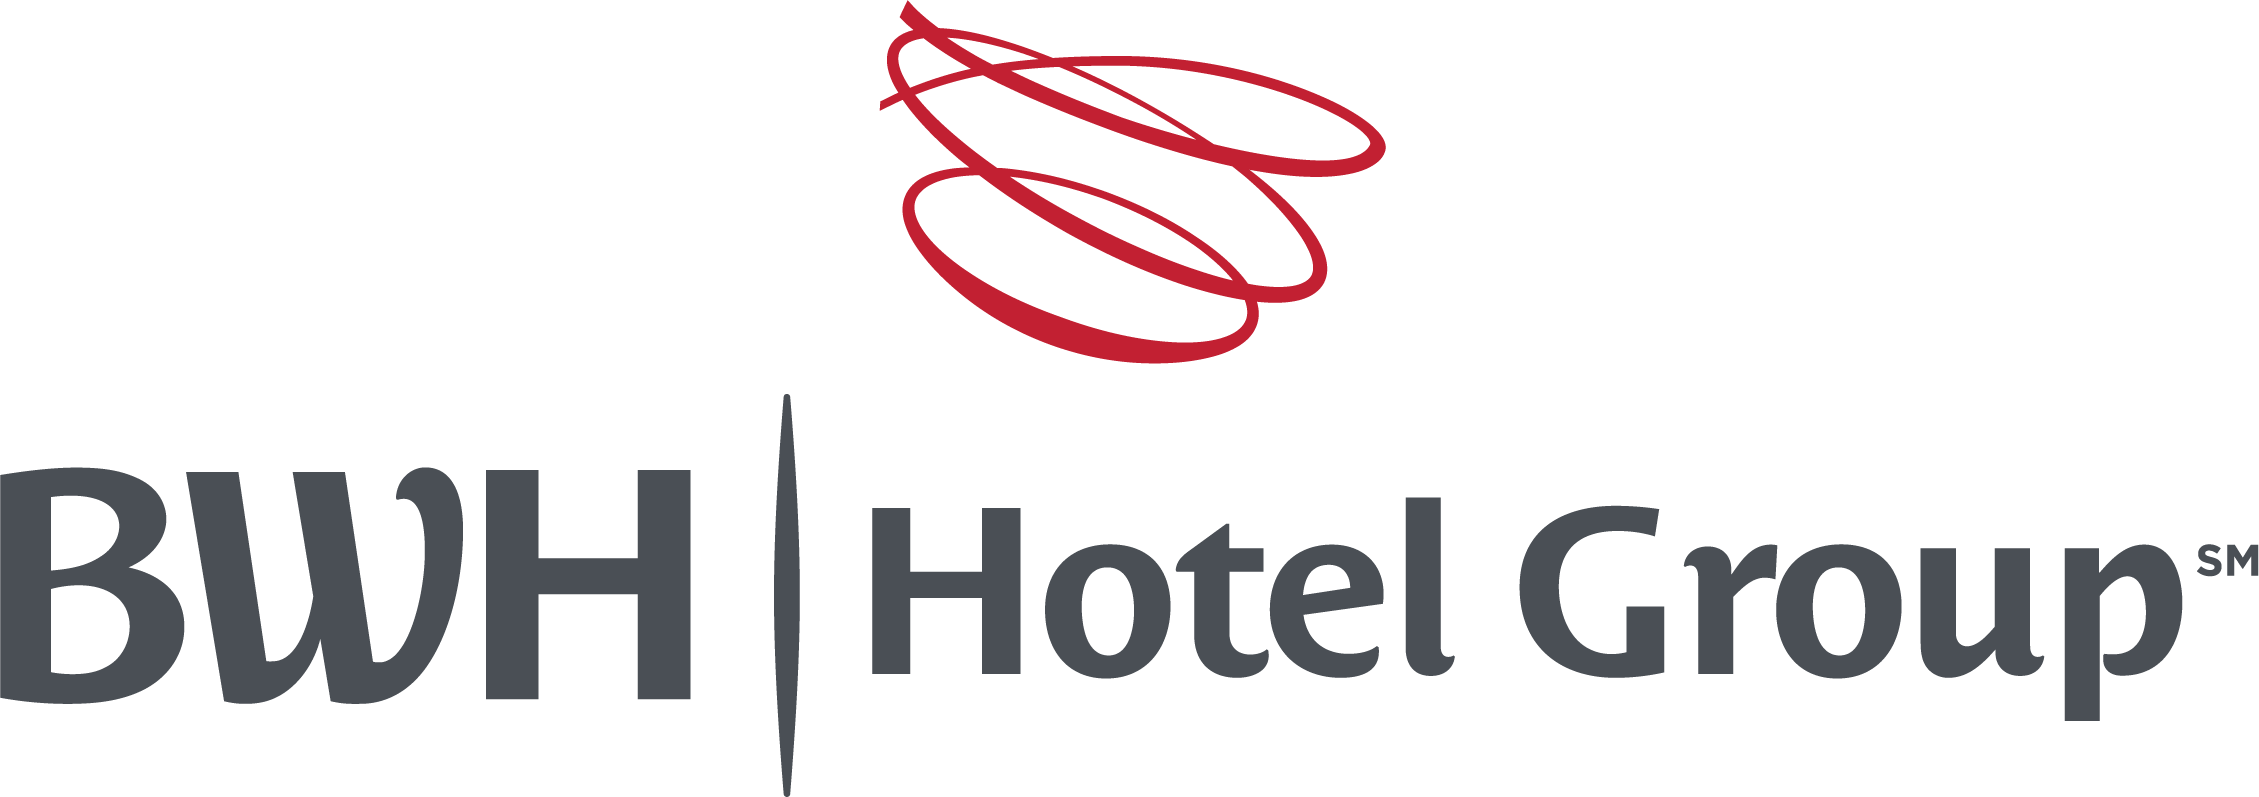 BWH Hotel Group Logo_CMYK (1).png